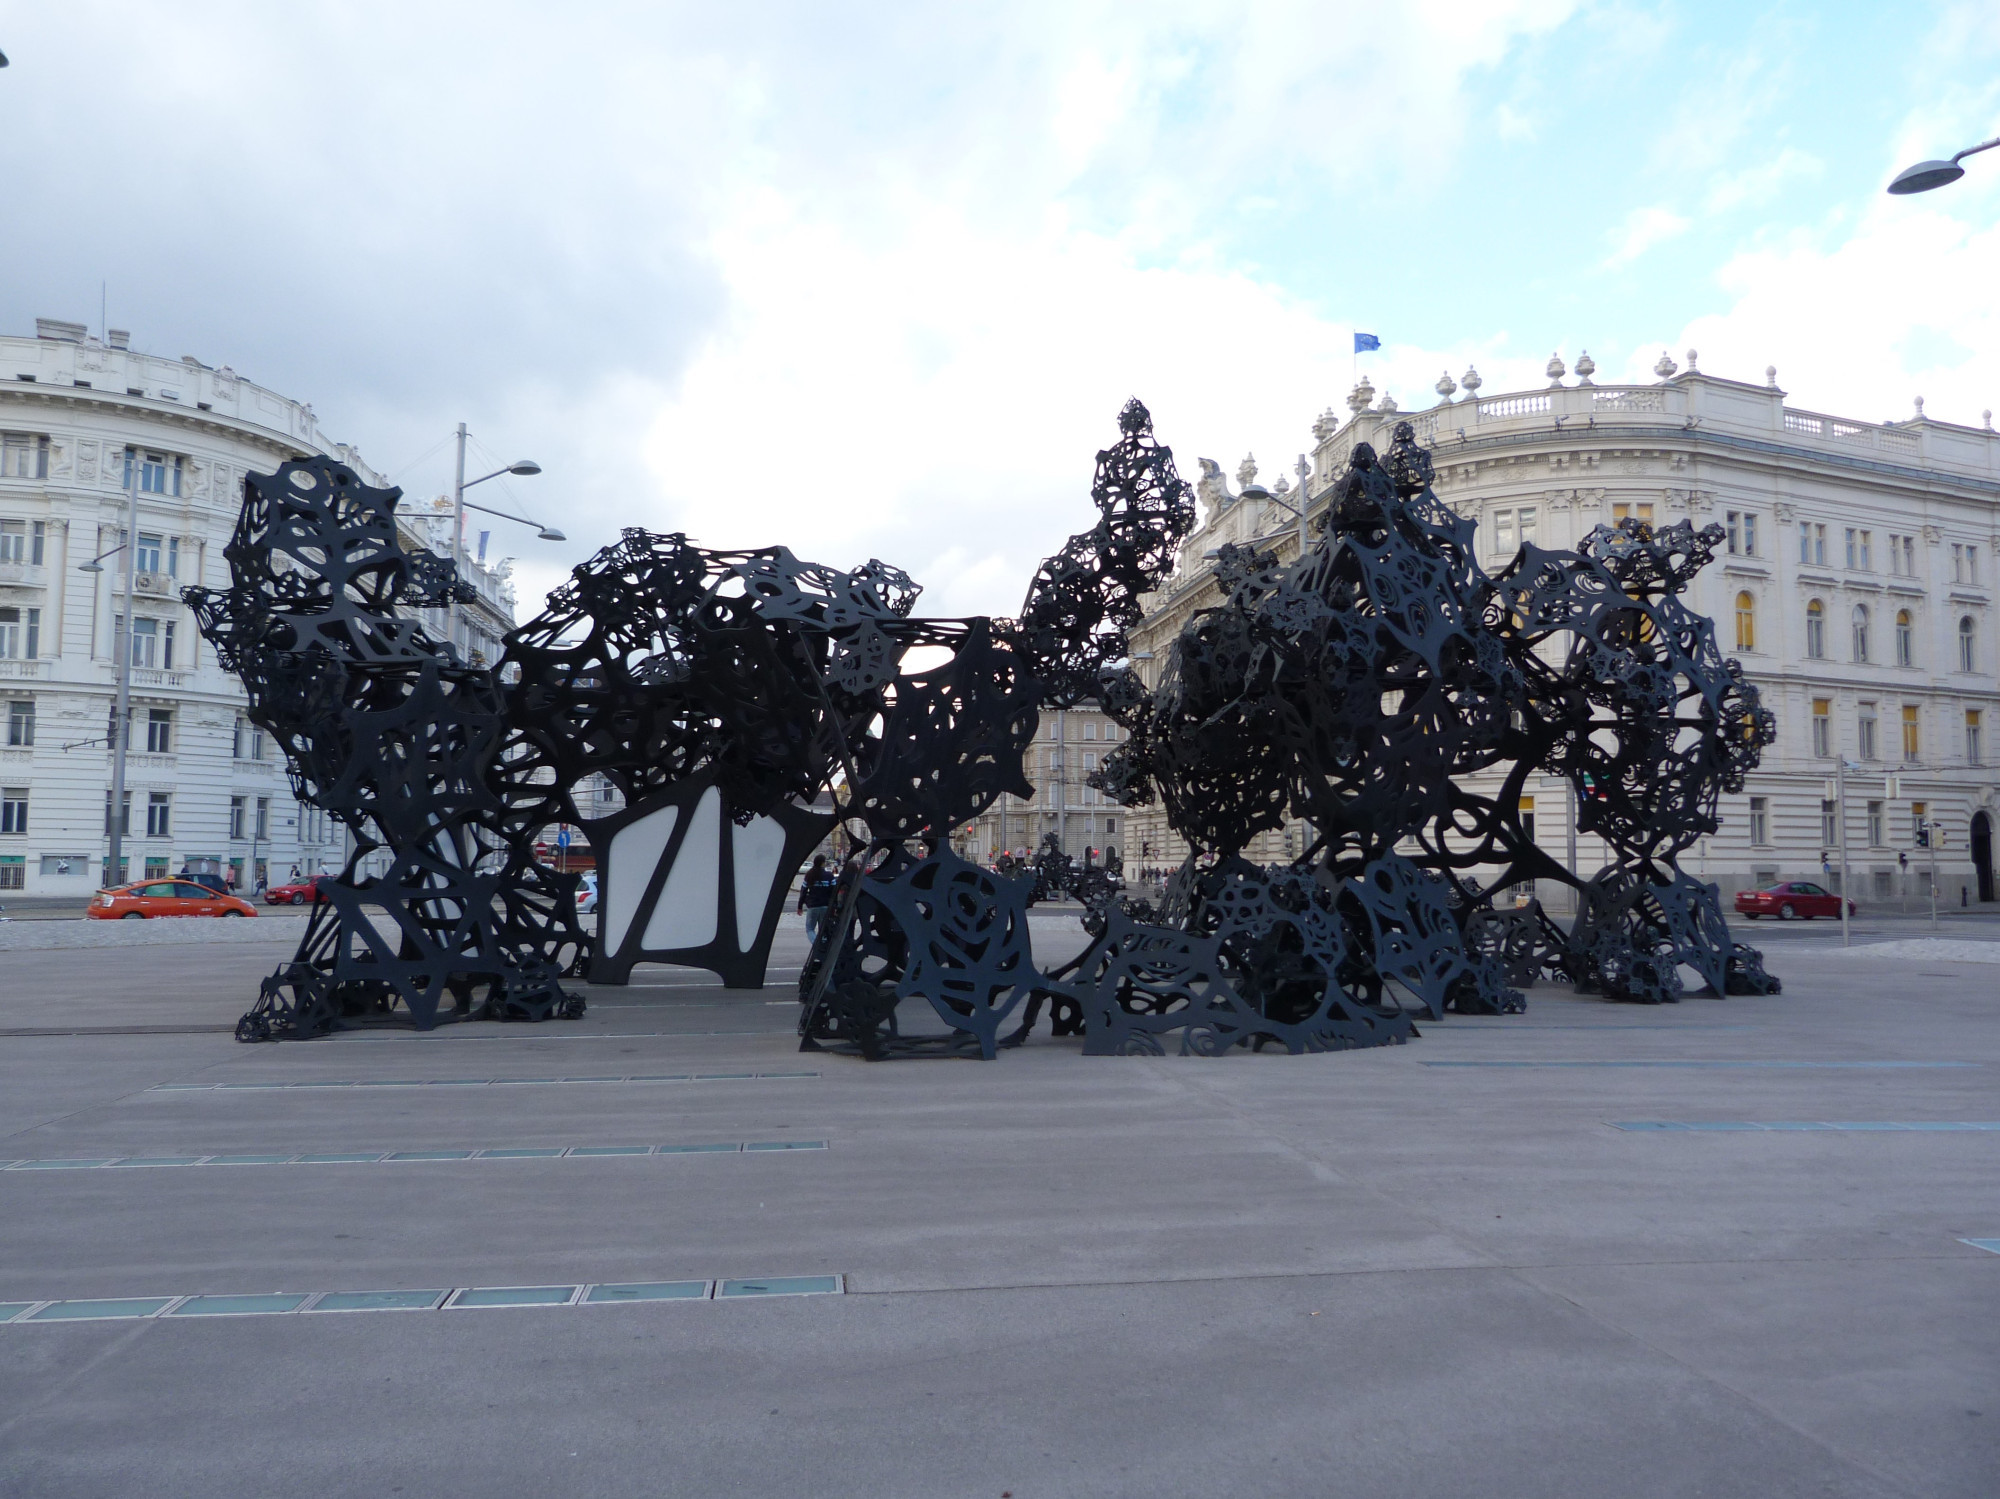 The Morning Line" noise sculpture on display in Schwarzenbergplatz,